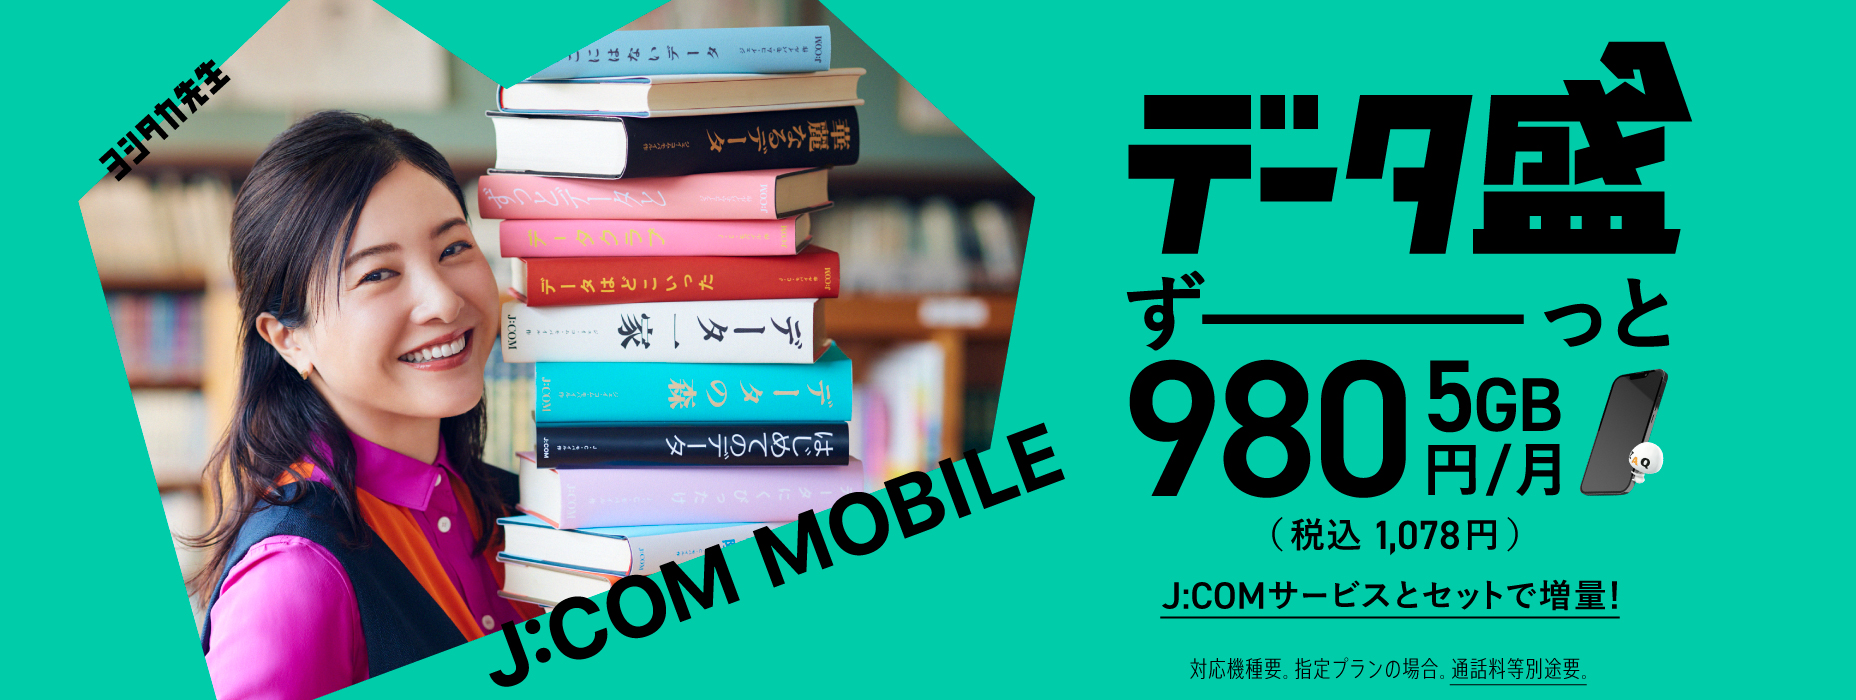 Data Mori 5GB 980 yen increase to data with smartphone and JCOM service set